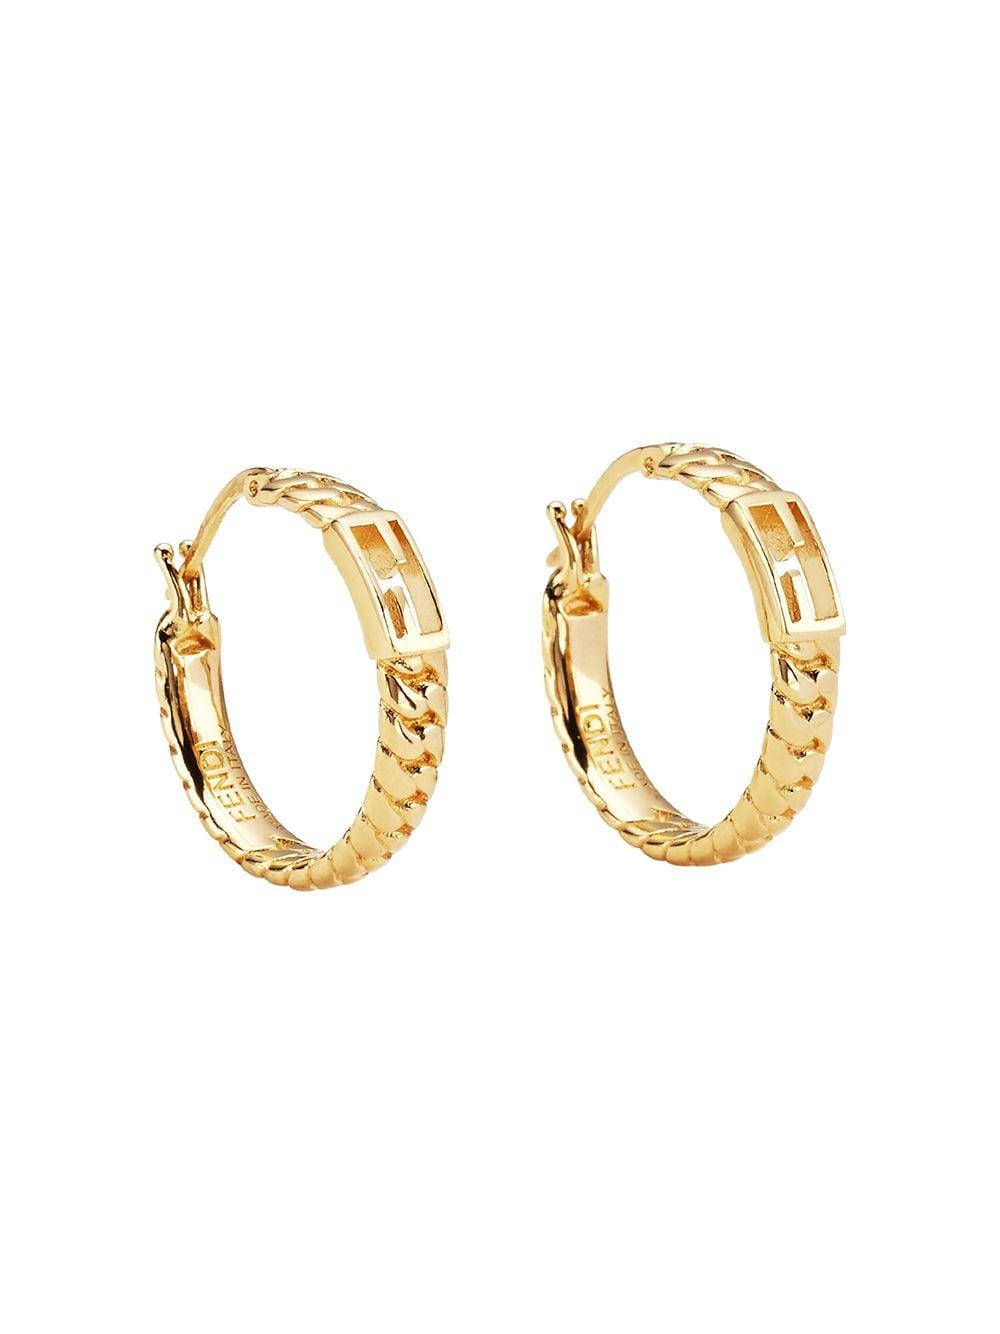 Fendi Ff Baguette Hoop Earrings in Gold (Metallic) - Lyst